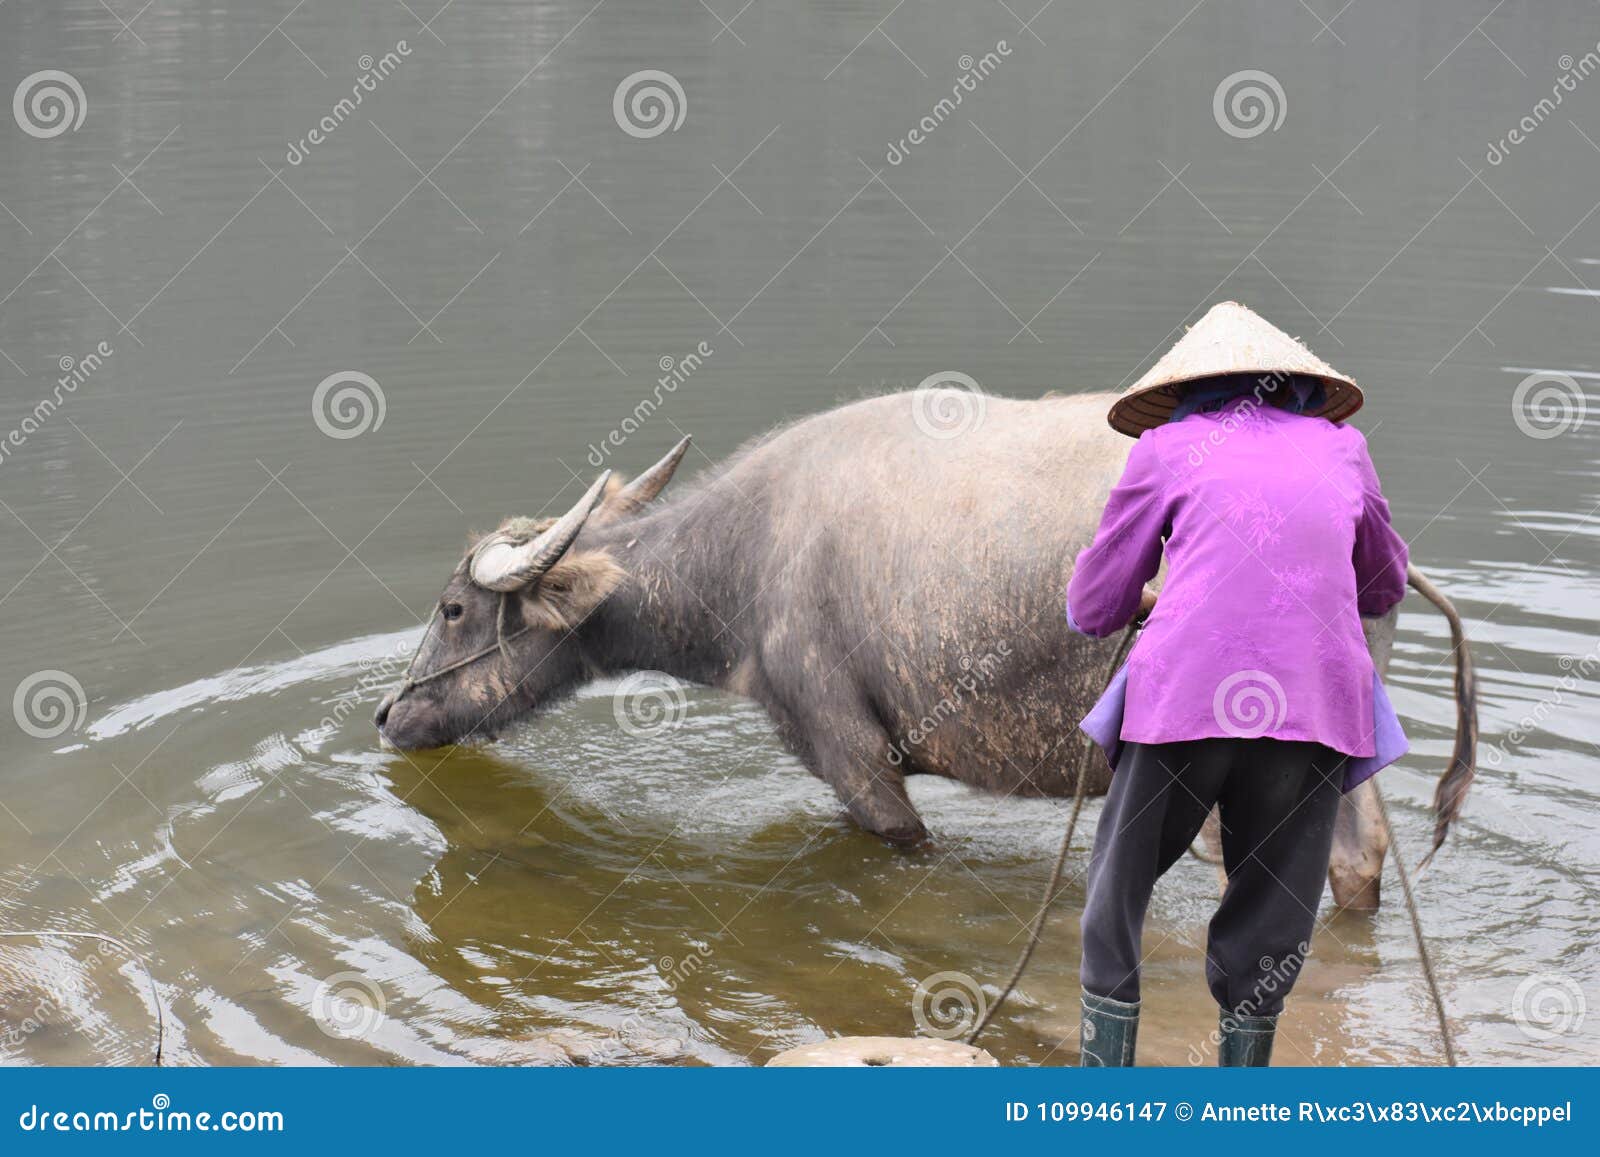 Closeup a Vietnamese Woman Bathing a Water Buffalo Work, Vietnam, Hanoi Stock Image - Image of ancient, hanoi: 109946147